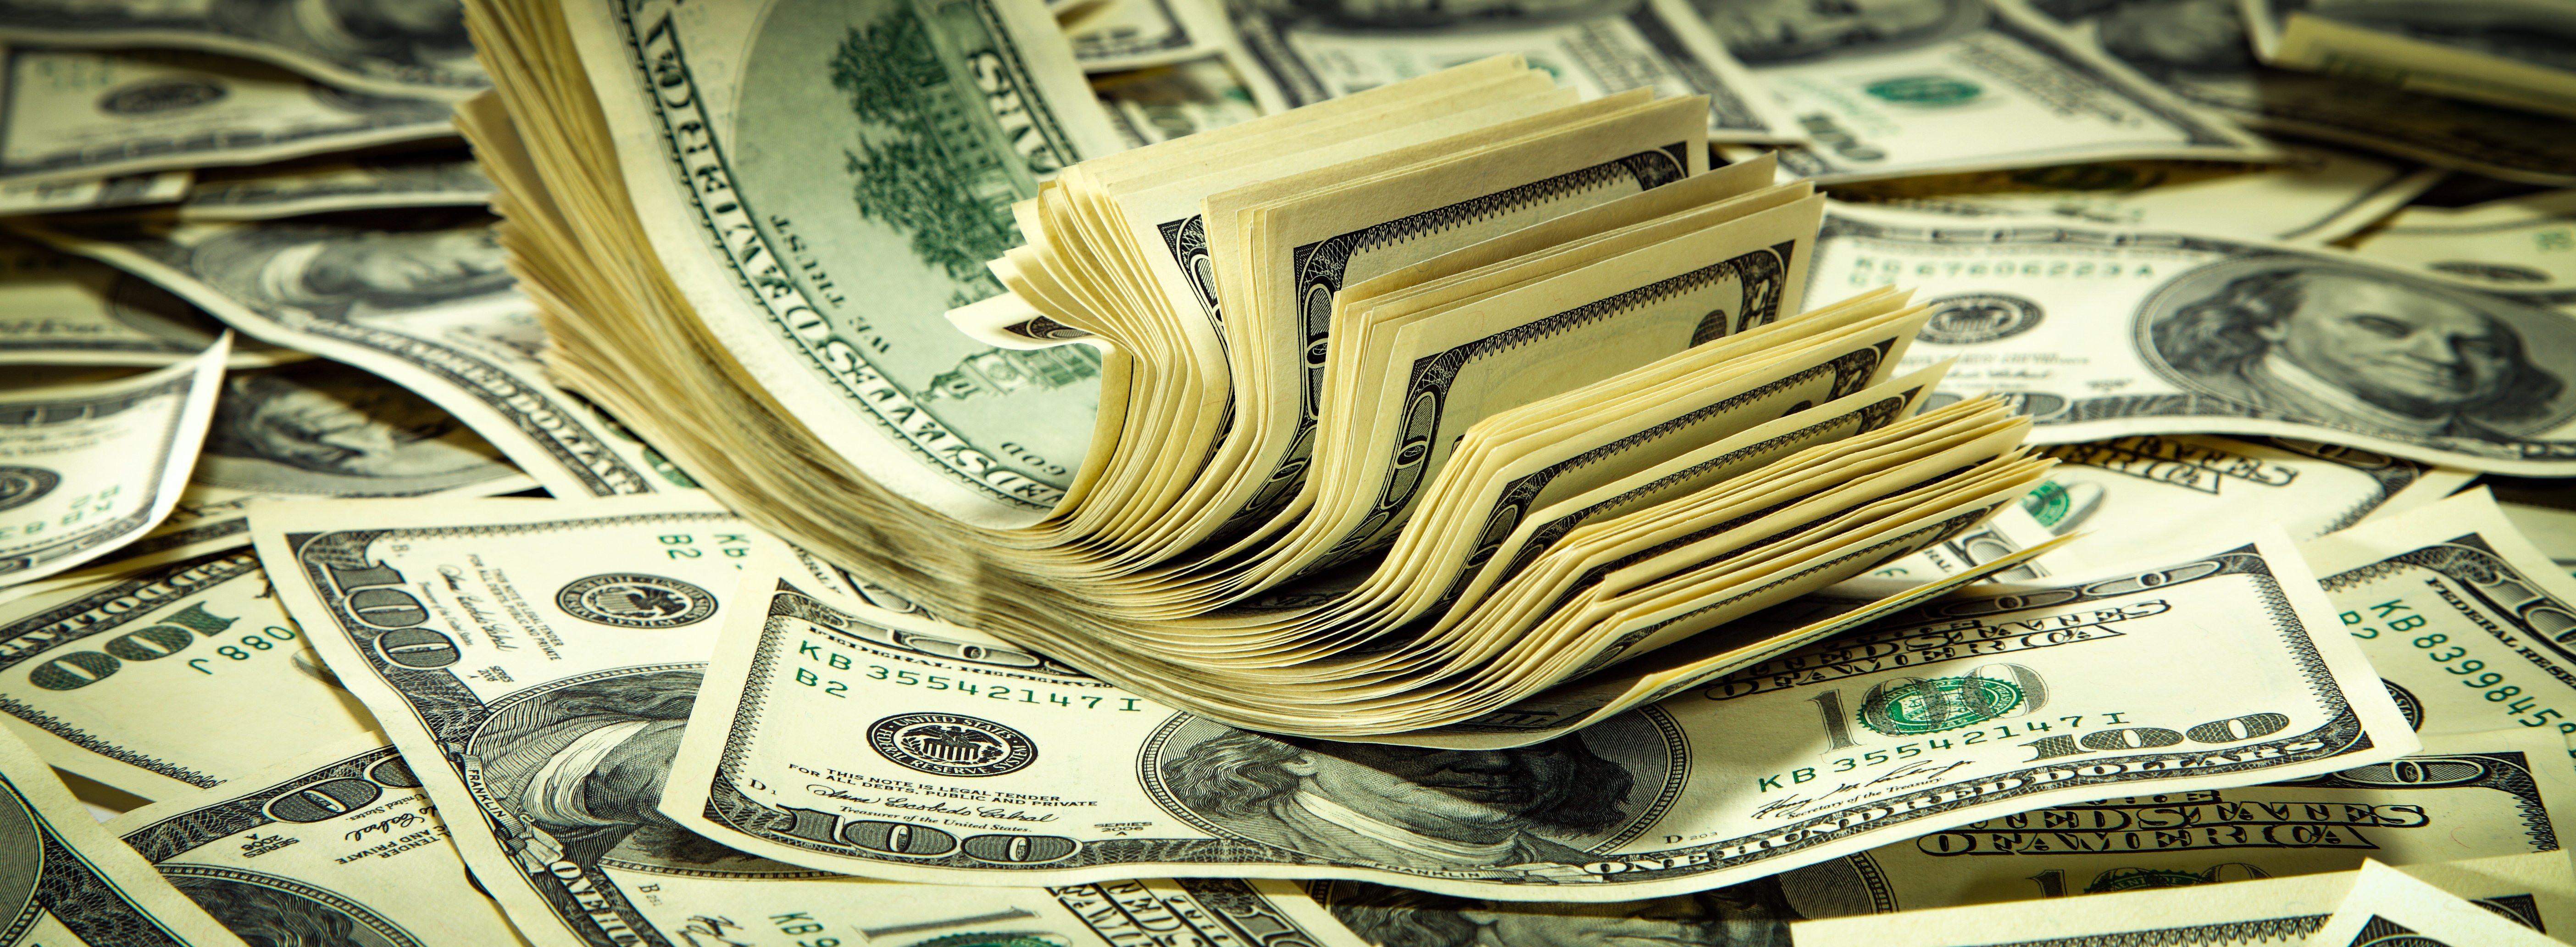 Dinero en efectivo. | Foto: Shutterstock